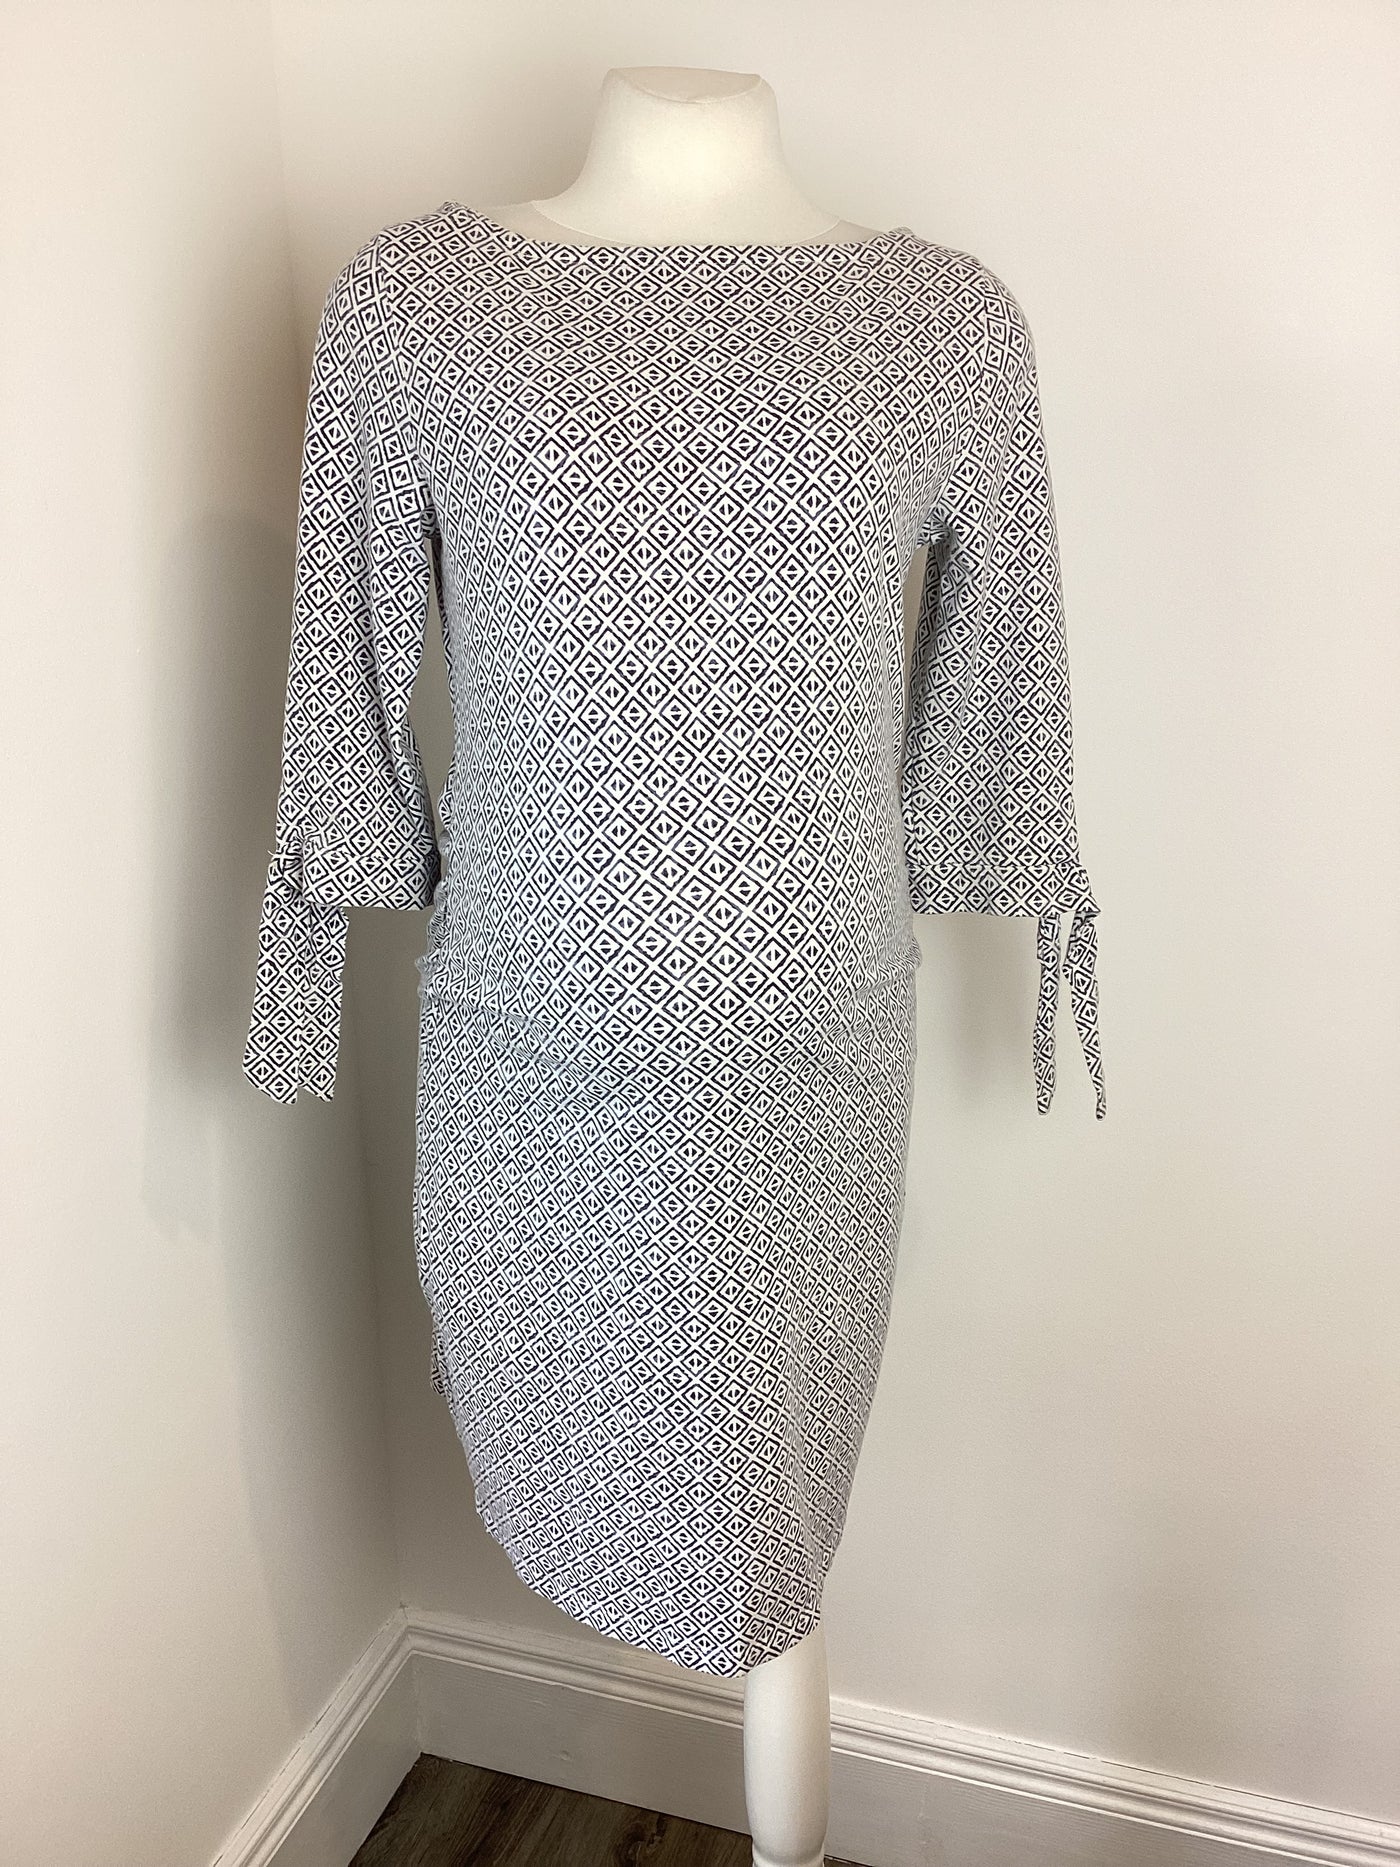 Esmara blue & white diamond print dress with sleeve ties - Size 14/16 (more like size 12/14)